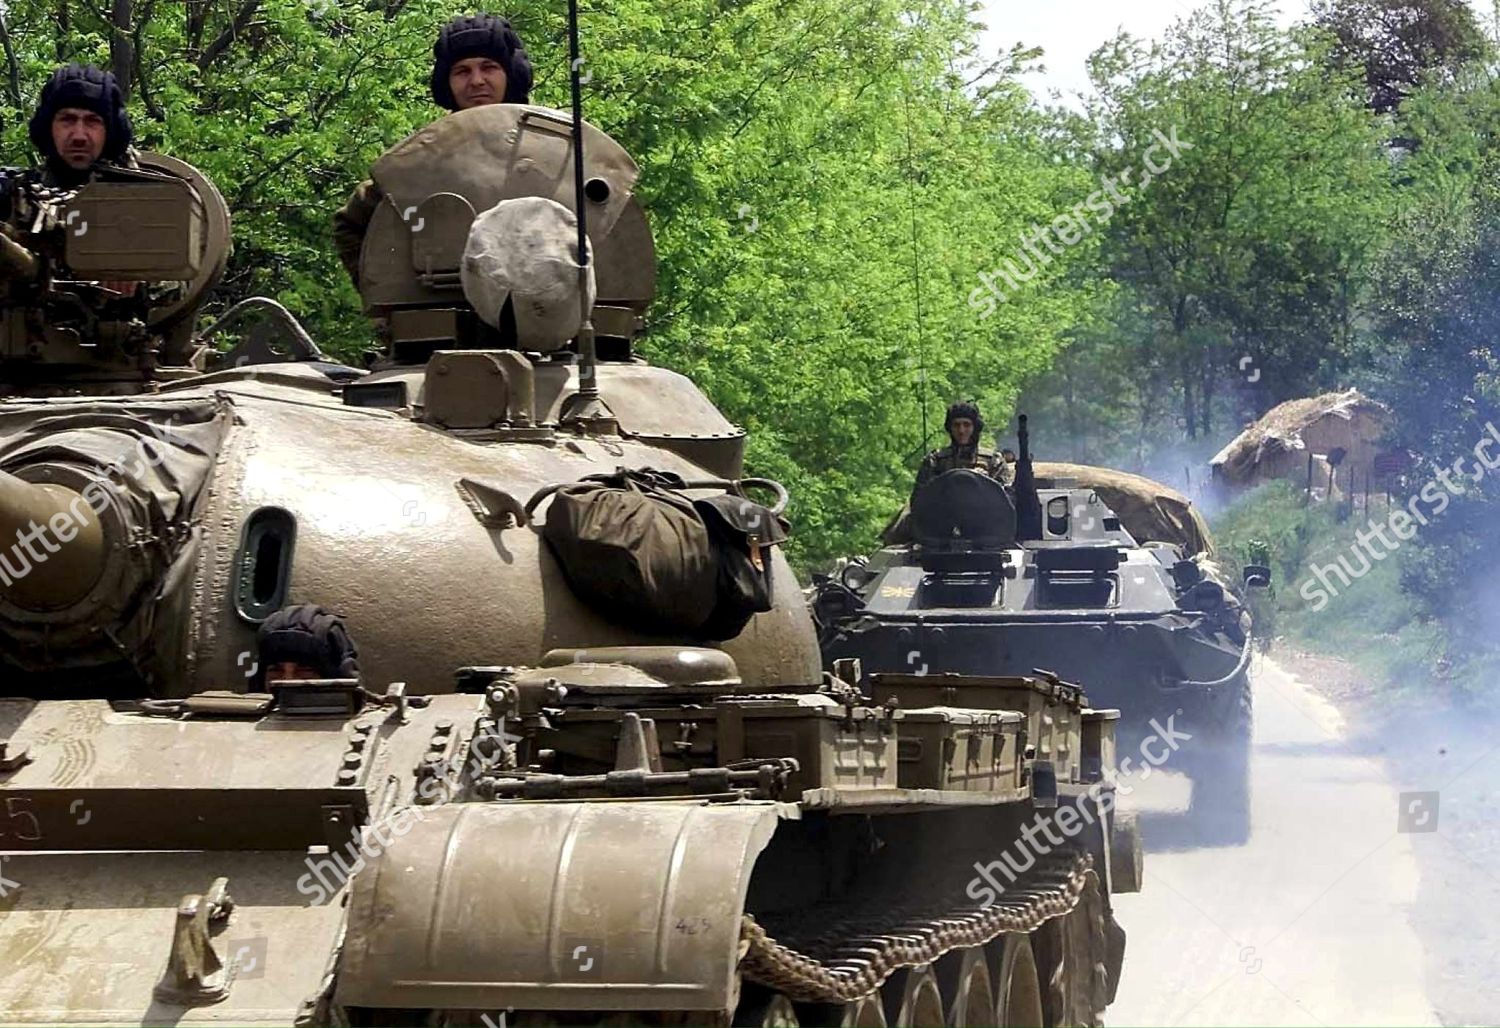 macedonia-tanks-may-2001-shutterstock-editorial-8482407b.jpg